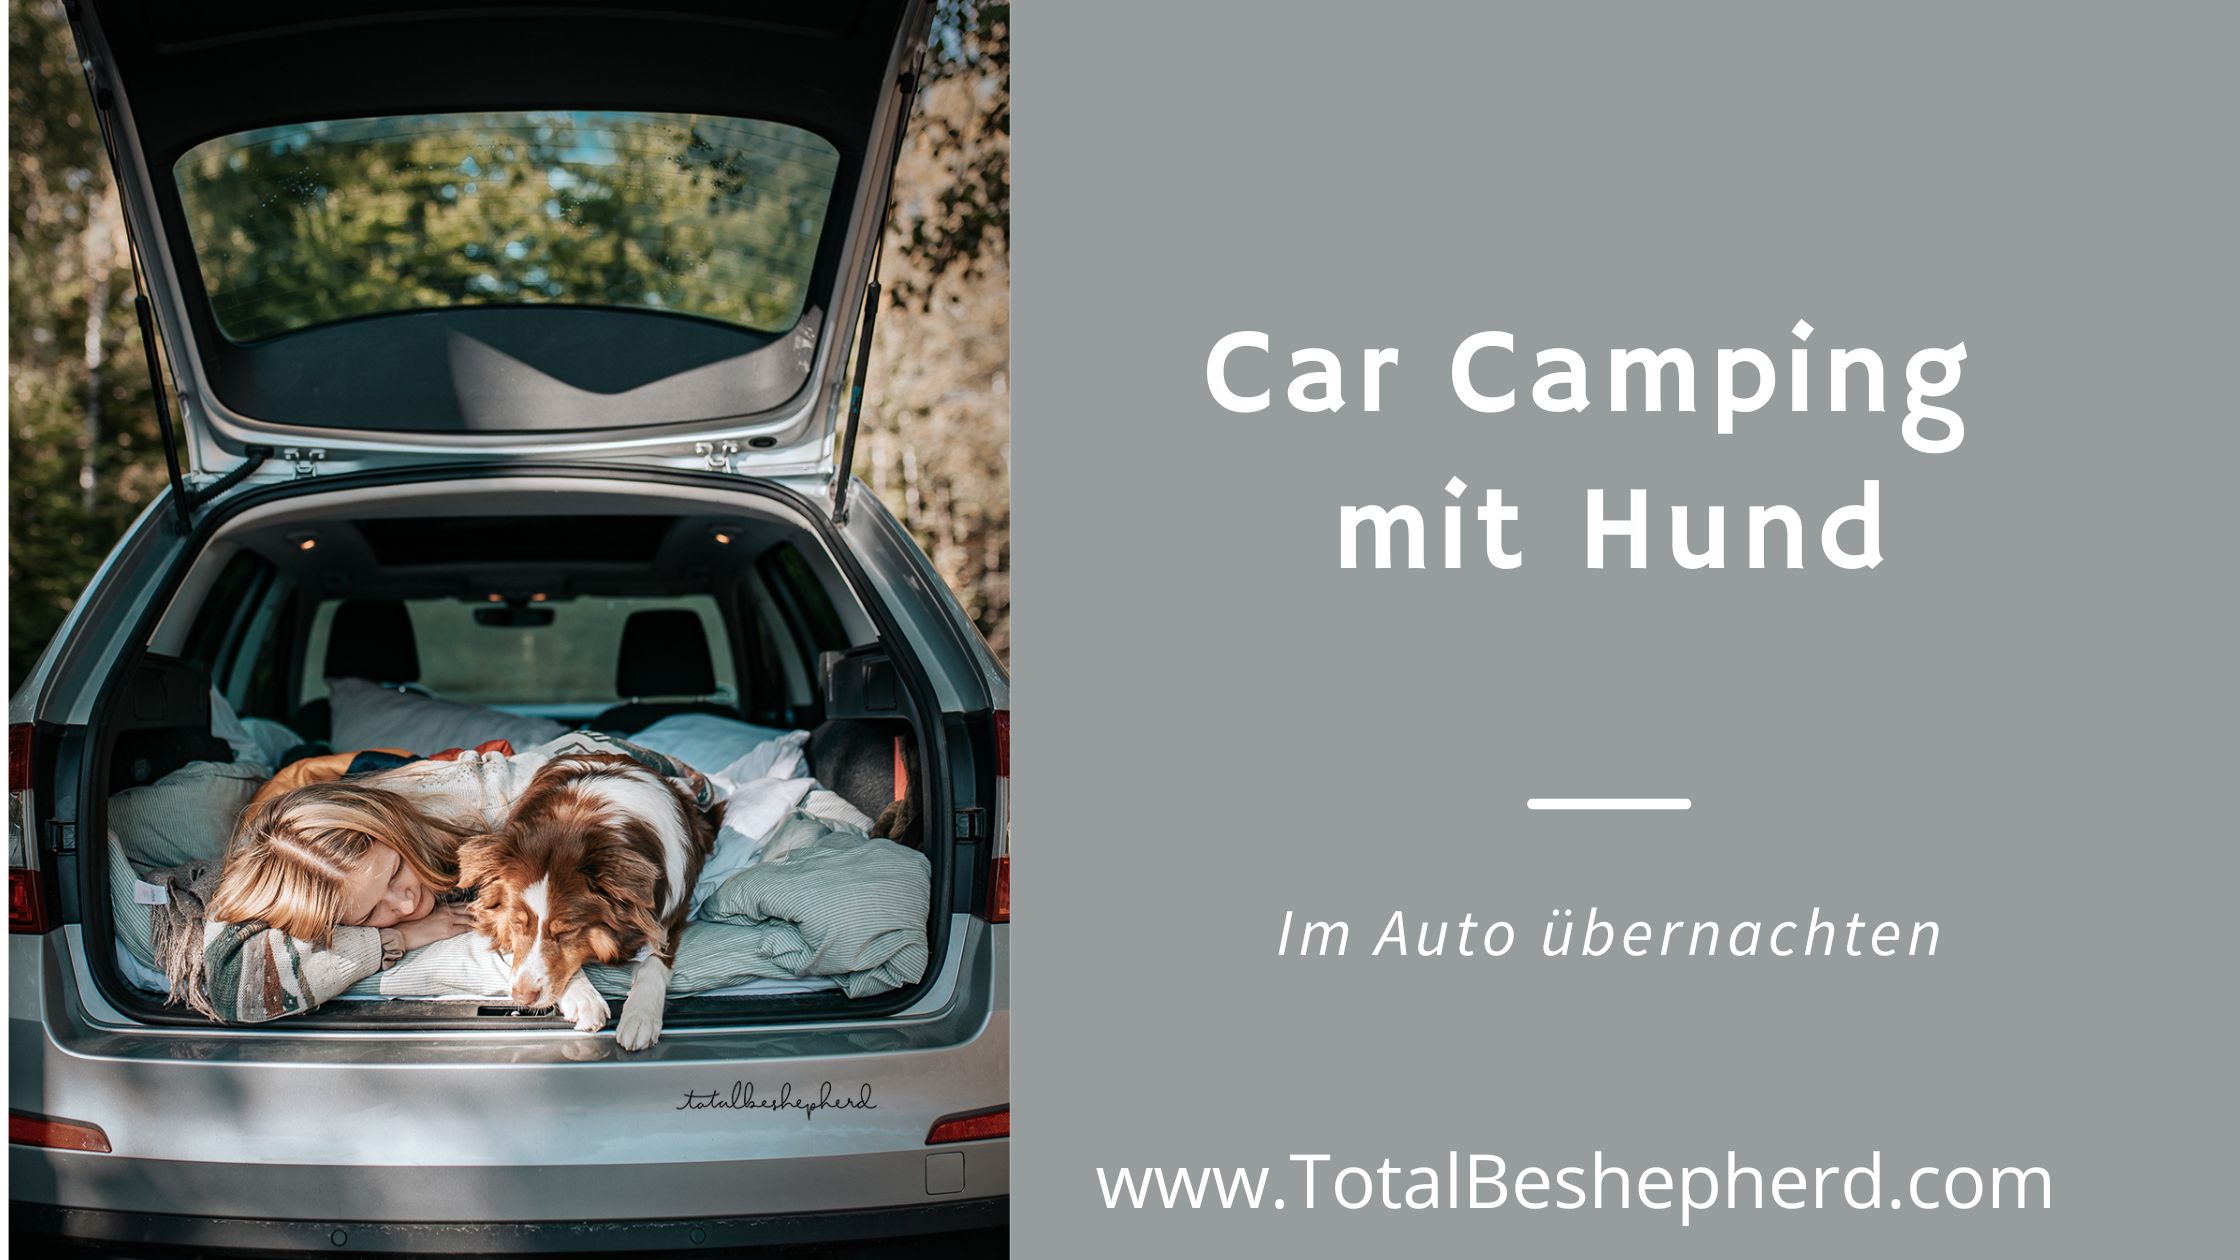 https://totalbeshepherd.com/wp-content/uploads/2022/07/Car-Camping-Hund.jpg